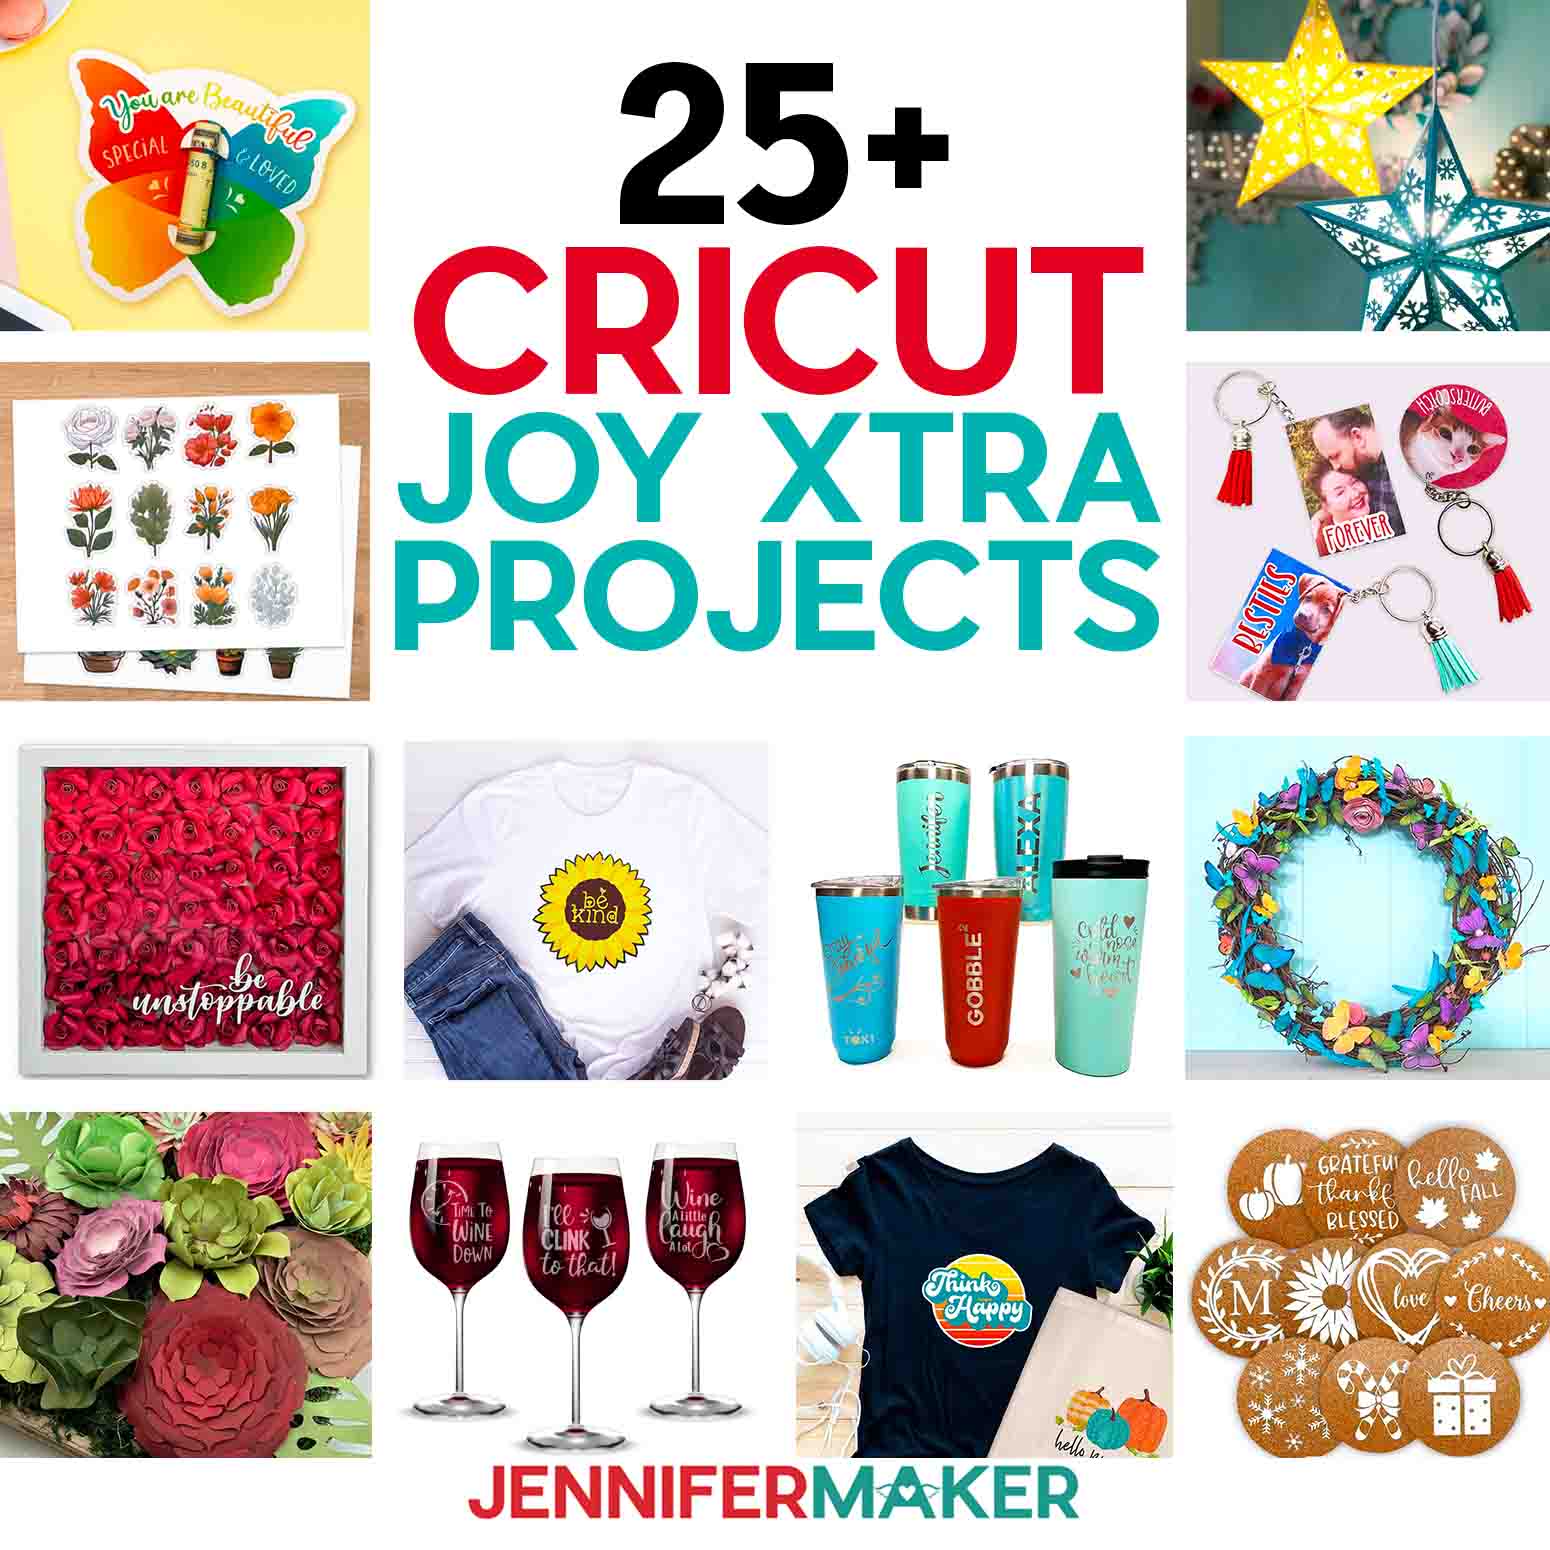 25+ Free Cricut Joy Xtra Projects To Make! - Jennifer Maker